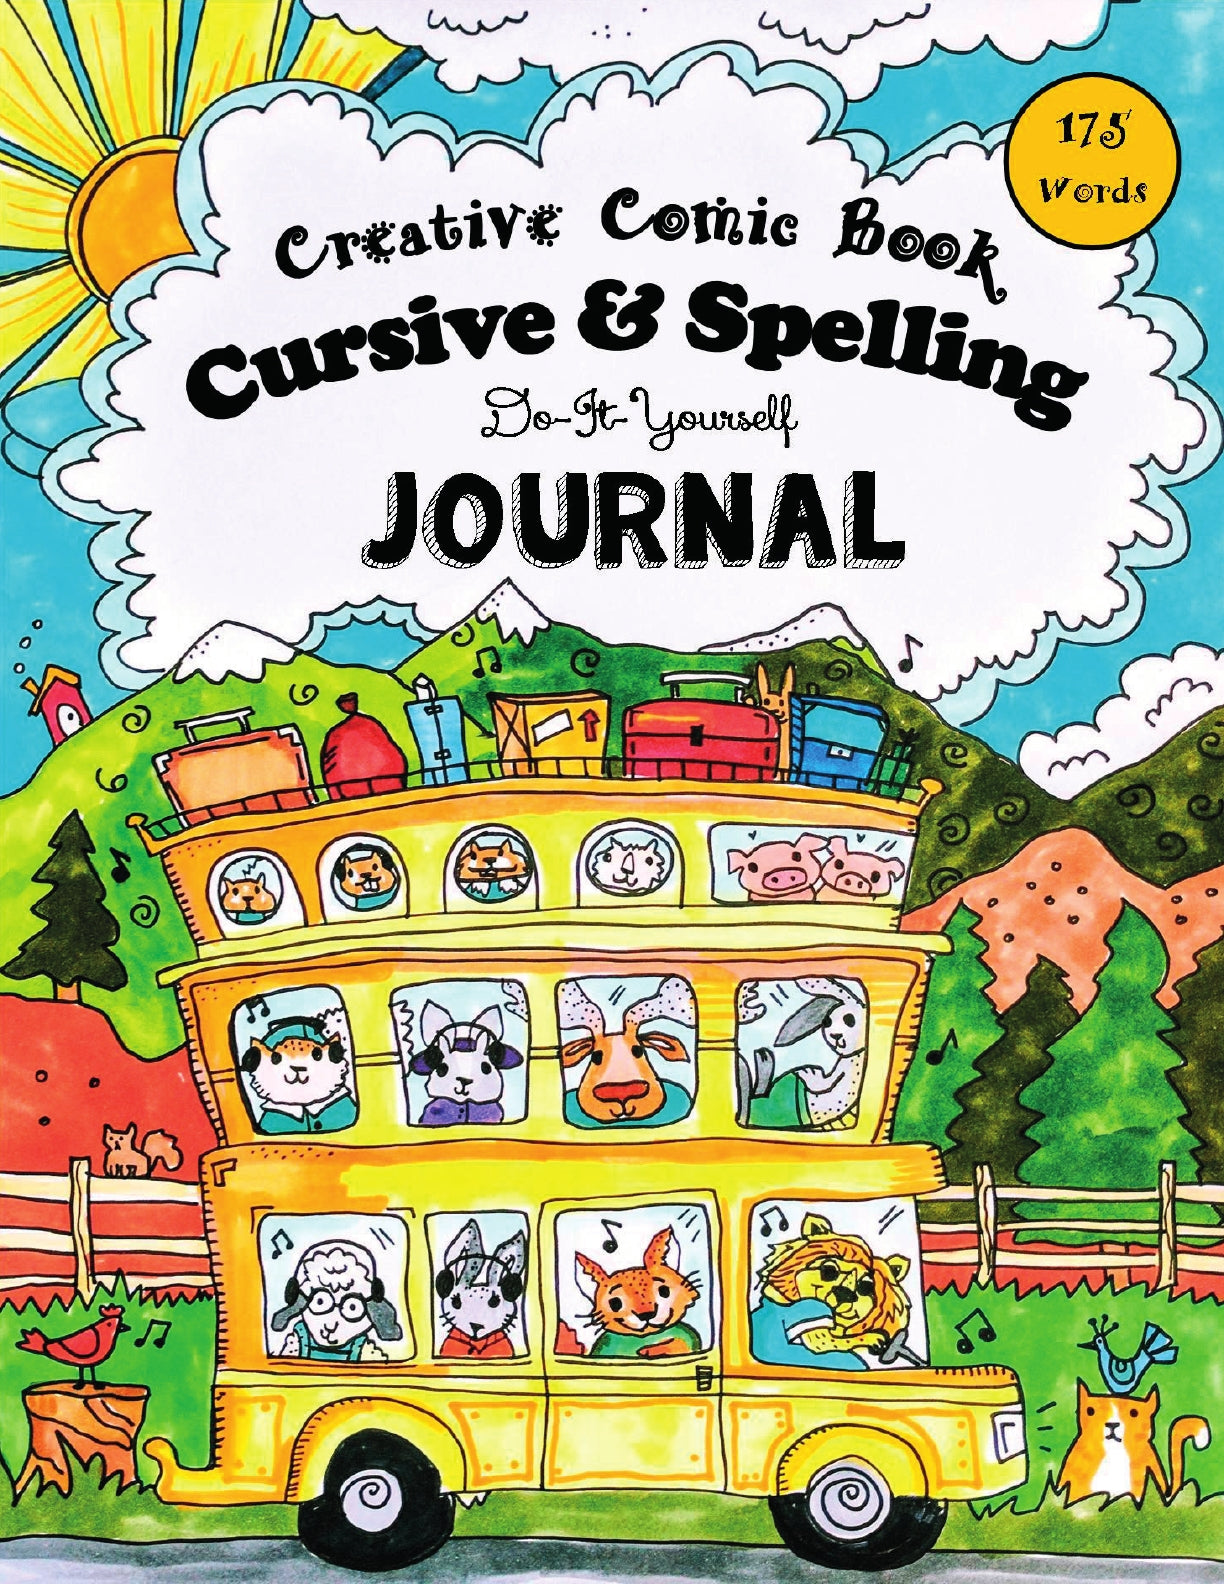 (Age 8+) Creative Comic Book - Cursive & Spelling